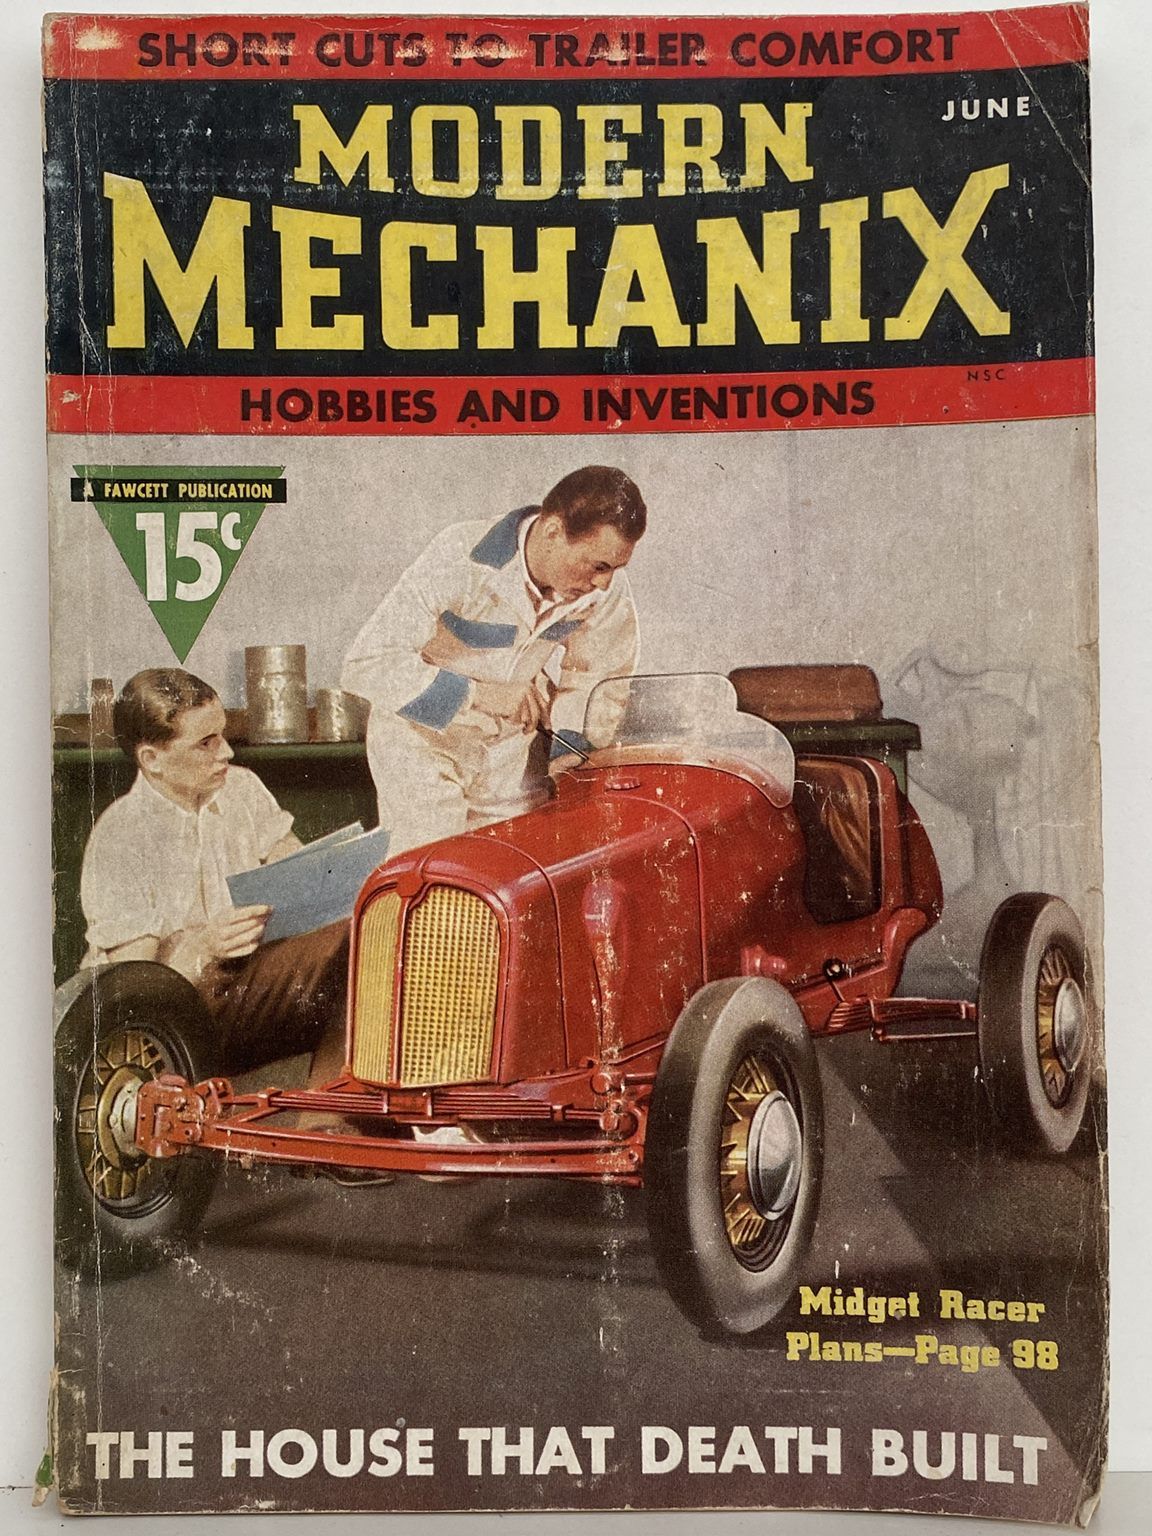 VINTAGE MAGAZINE: Modern Mechanix and Inventions - Vol 18, No. 2 - June 1937